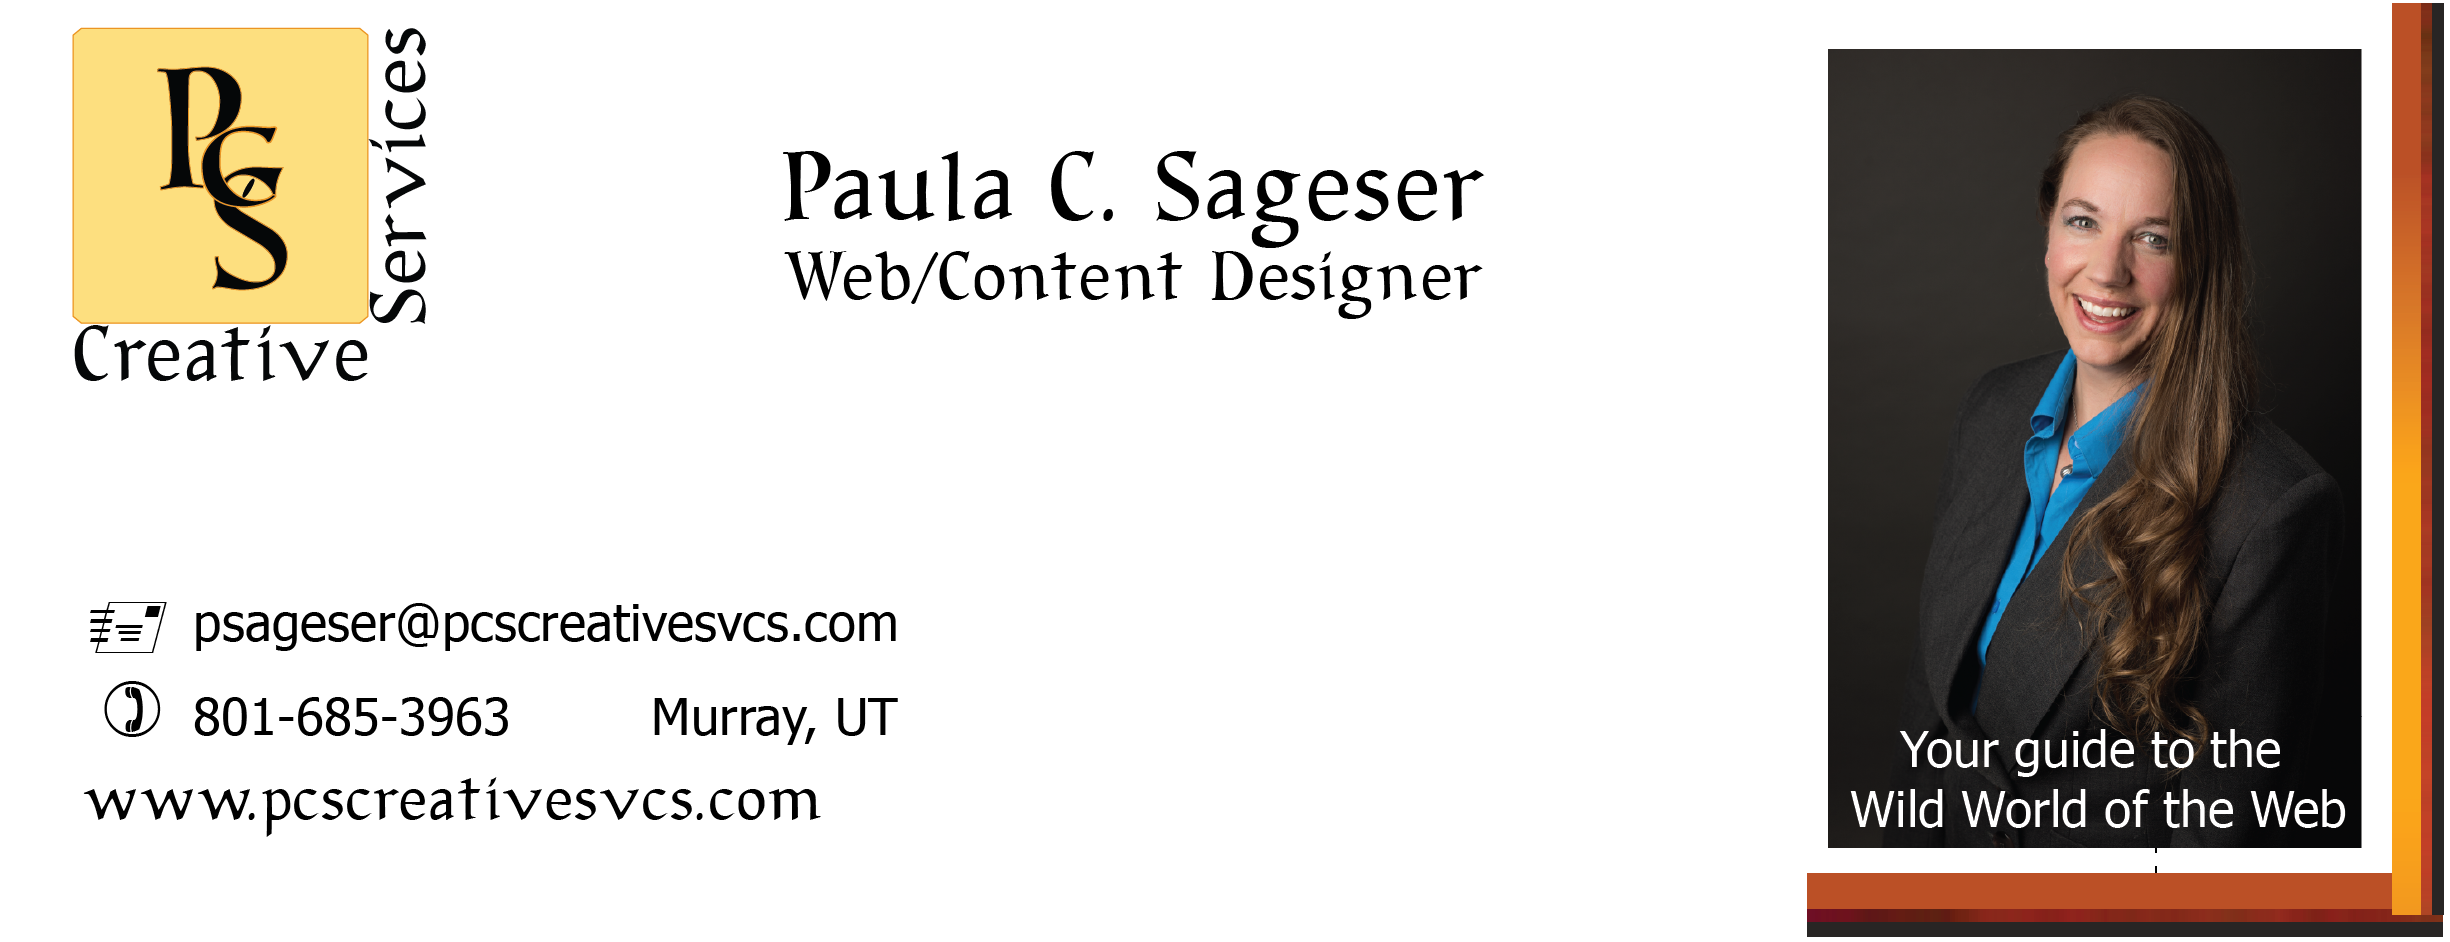 PCS Creative Services Contact Info Paula Sageser Web Designer